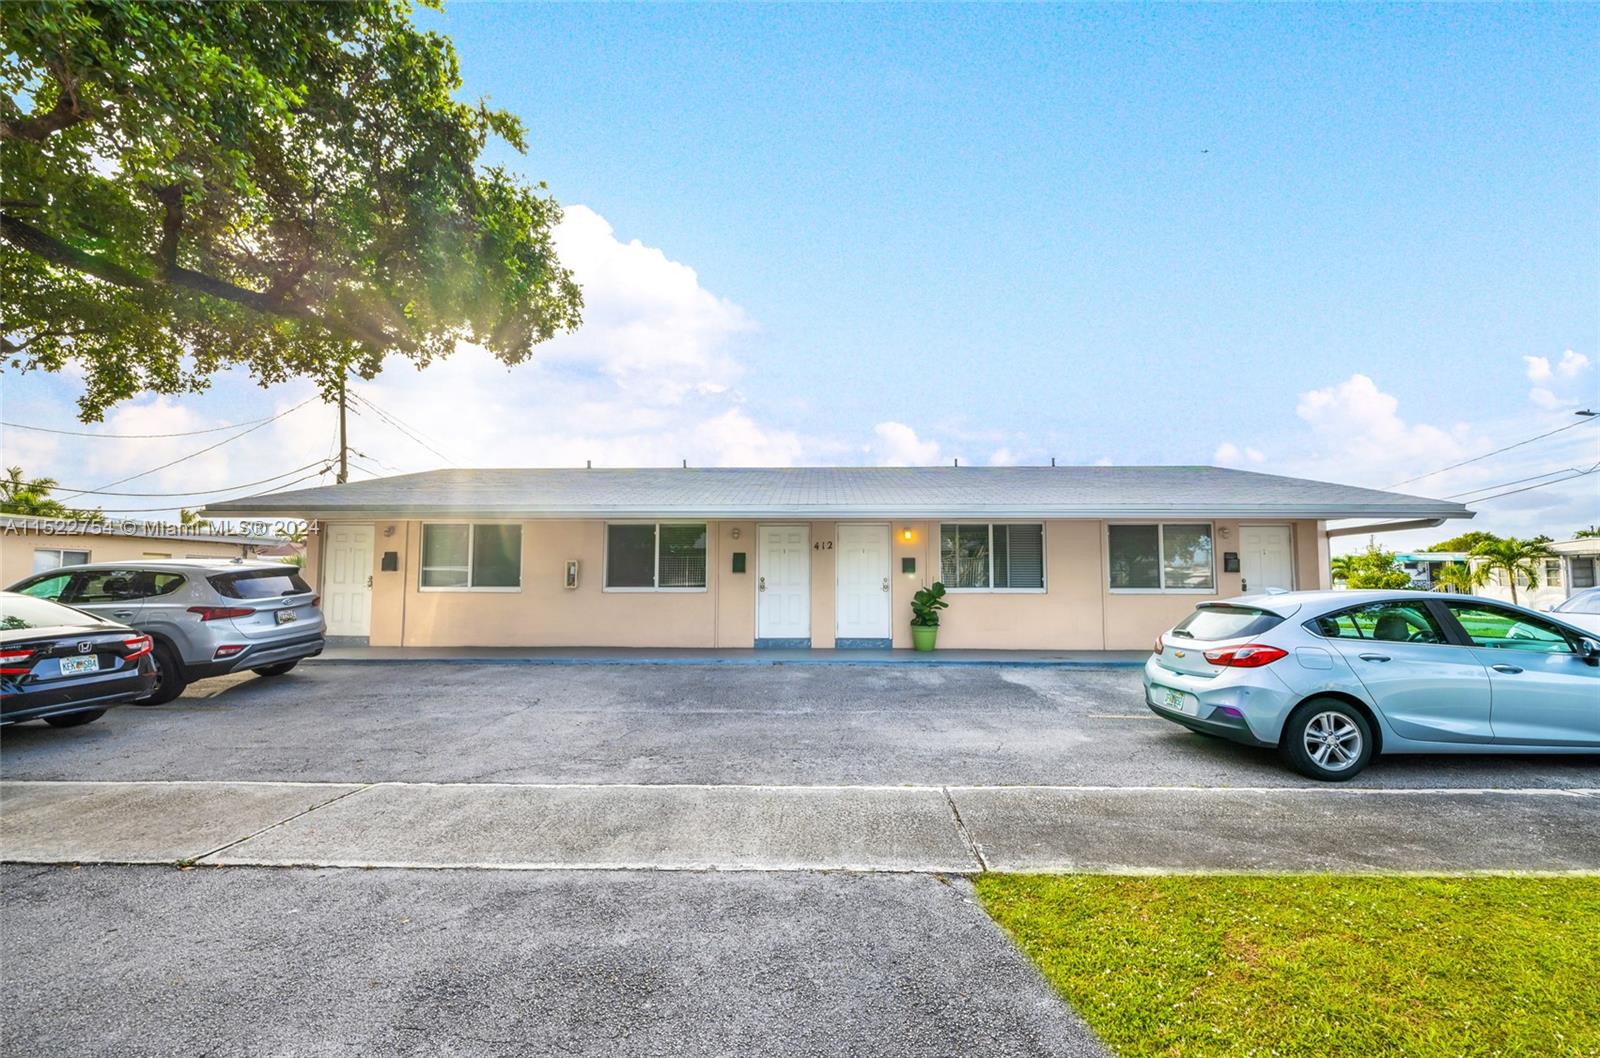 Rental Property at 412 Ne 4th Ave, Hallandale Beach, Broward County, Florida -  - $990,000 MO.